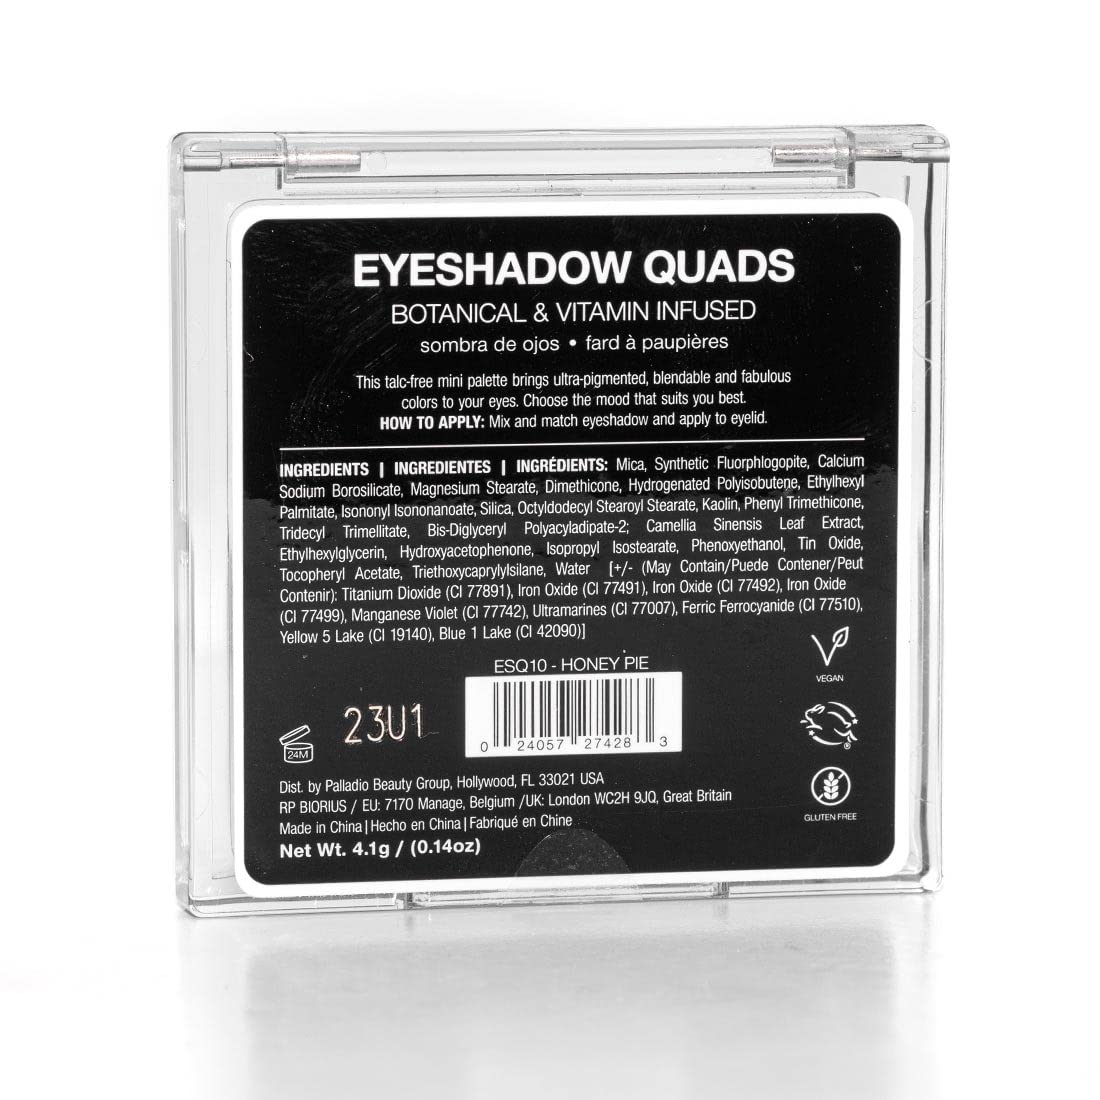 Palladio Eyeshadow Quads, Velvety Pigmented Blendable Matte, Metallic & Shimmer Finishes, Creamy Formula, Four Way Quad Eye Shad